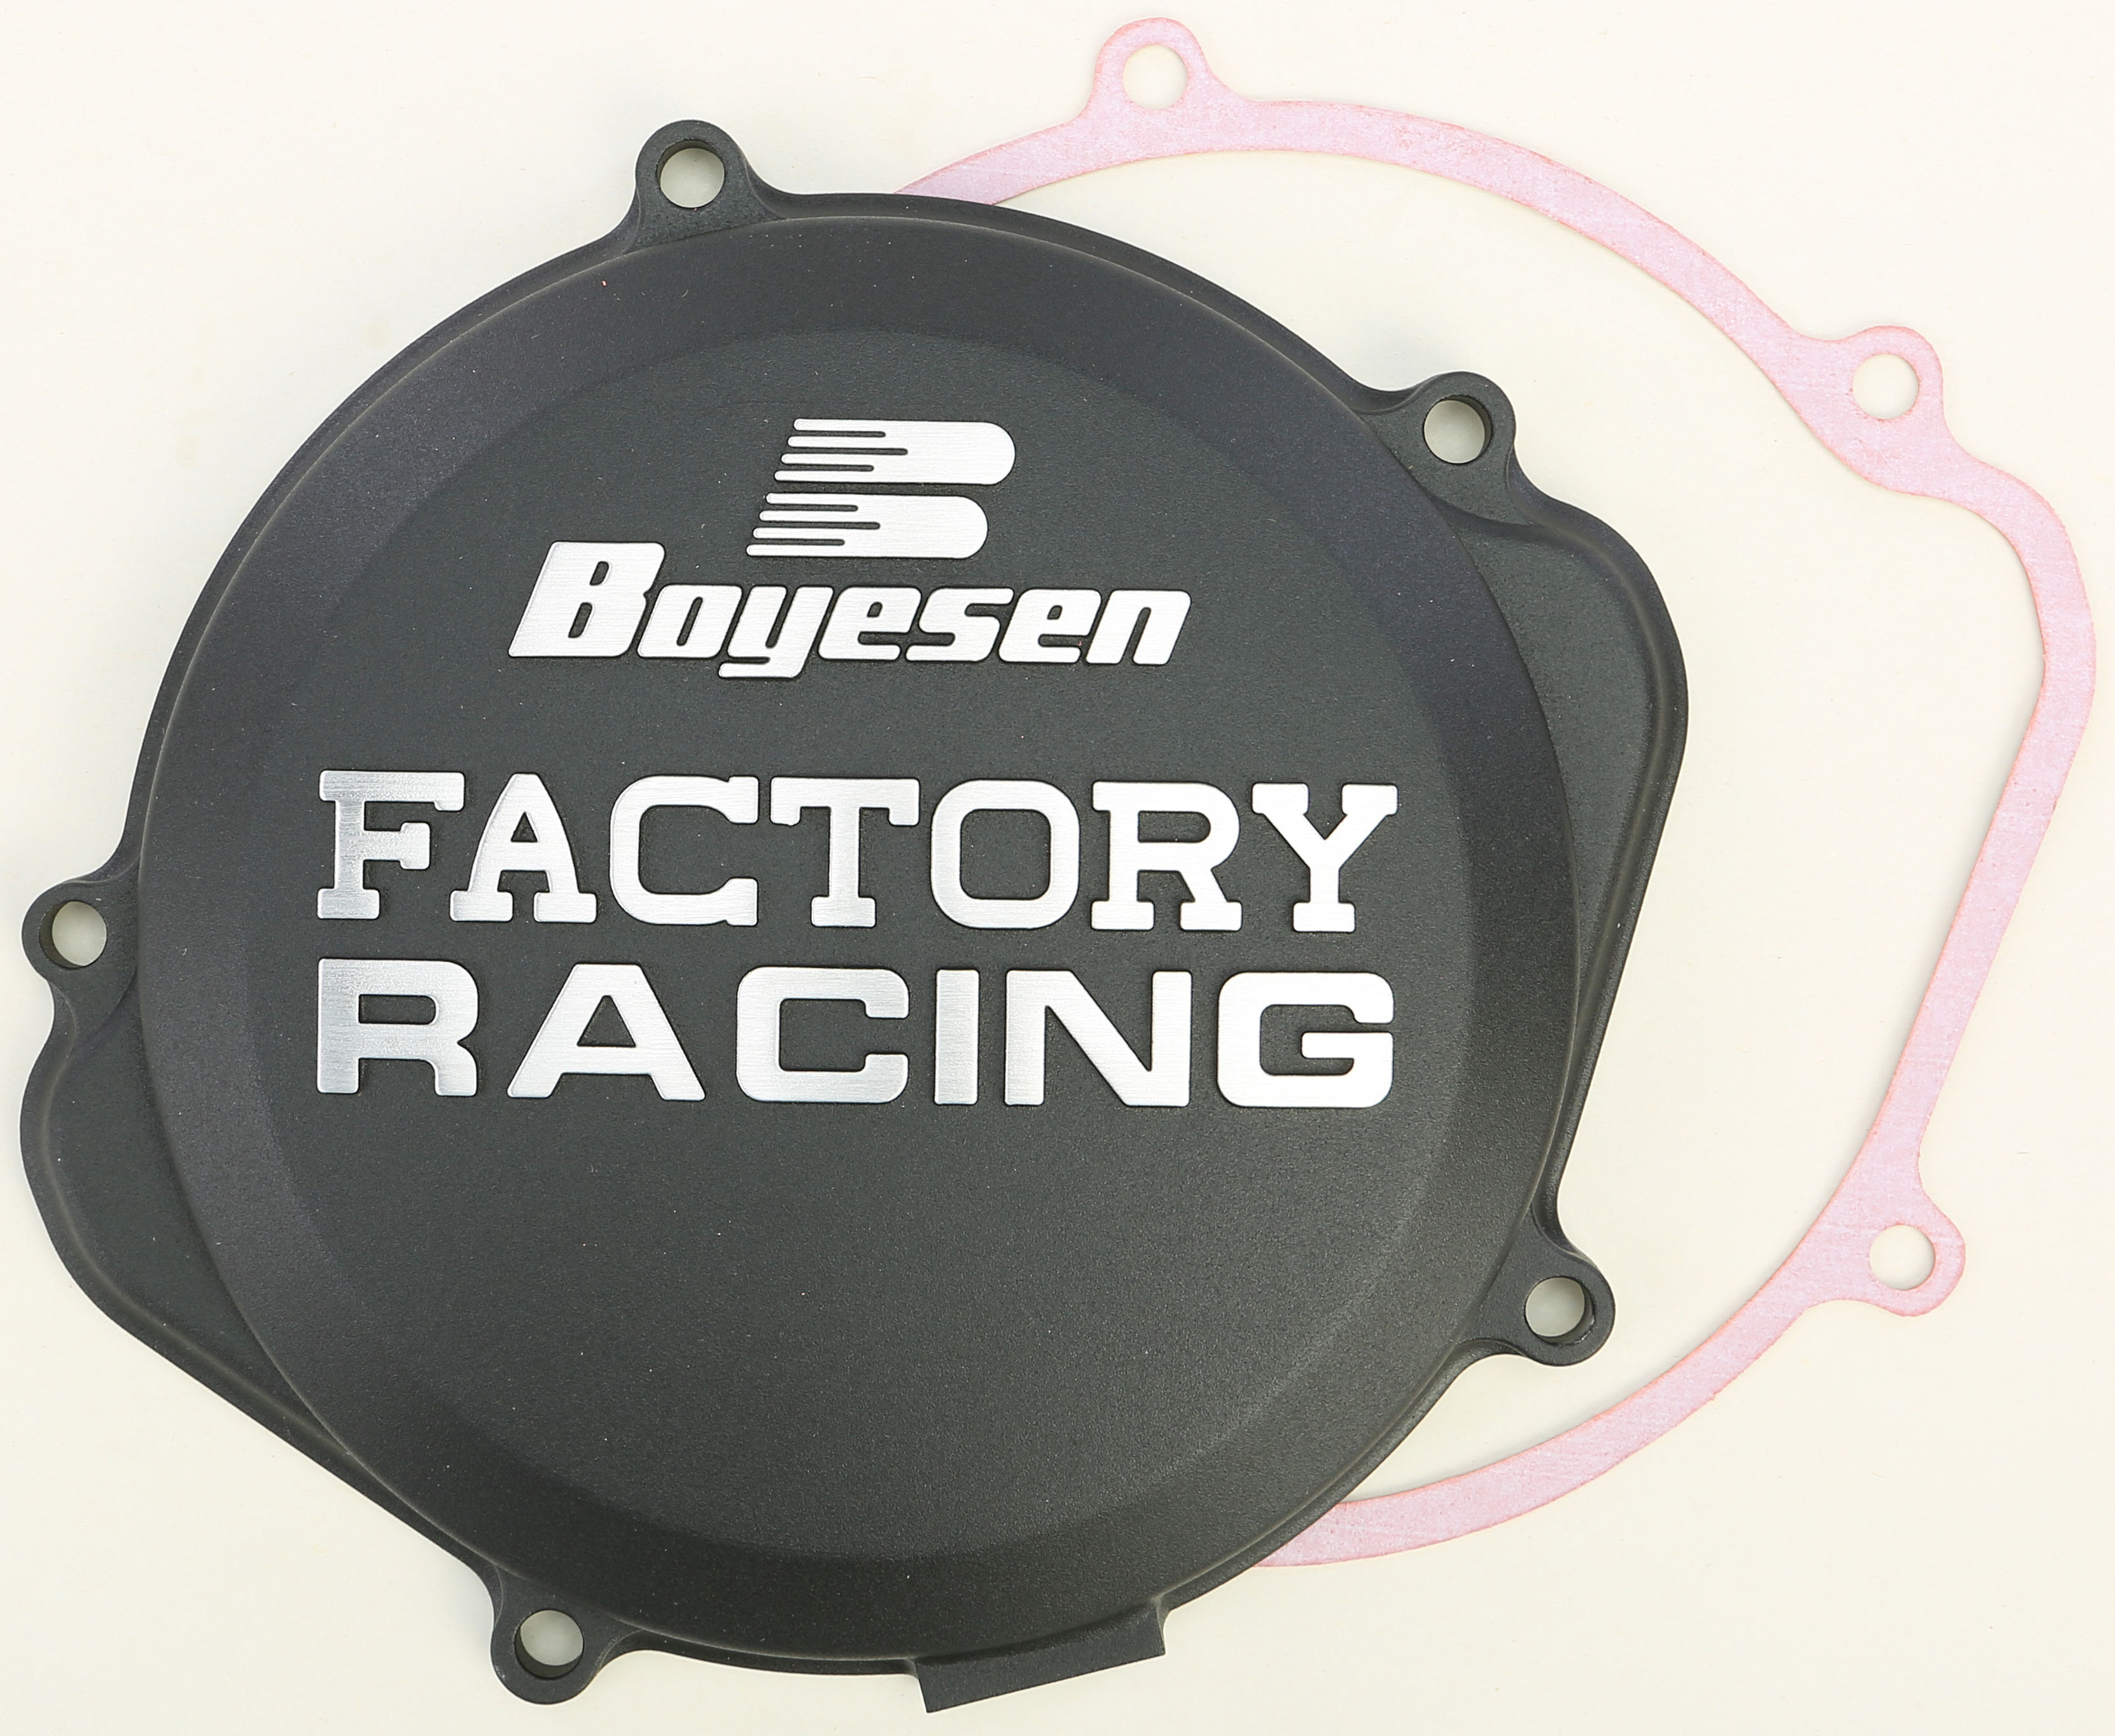 Black Factory Racing Clutch Cover - 04-09 Honda CR250R - Click Image to Close